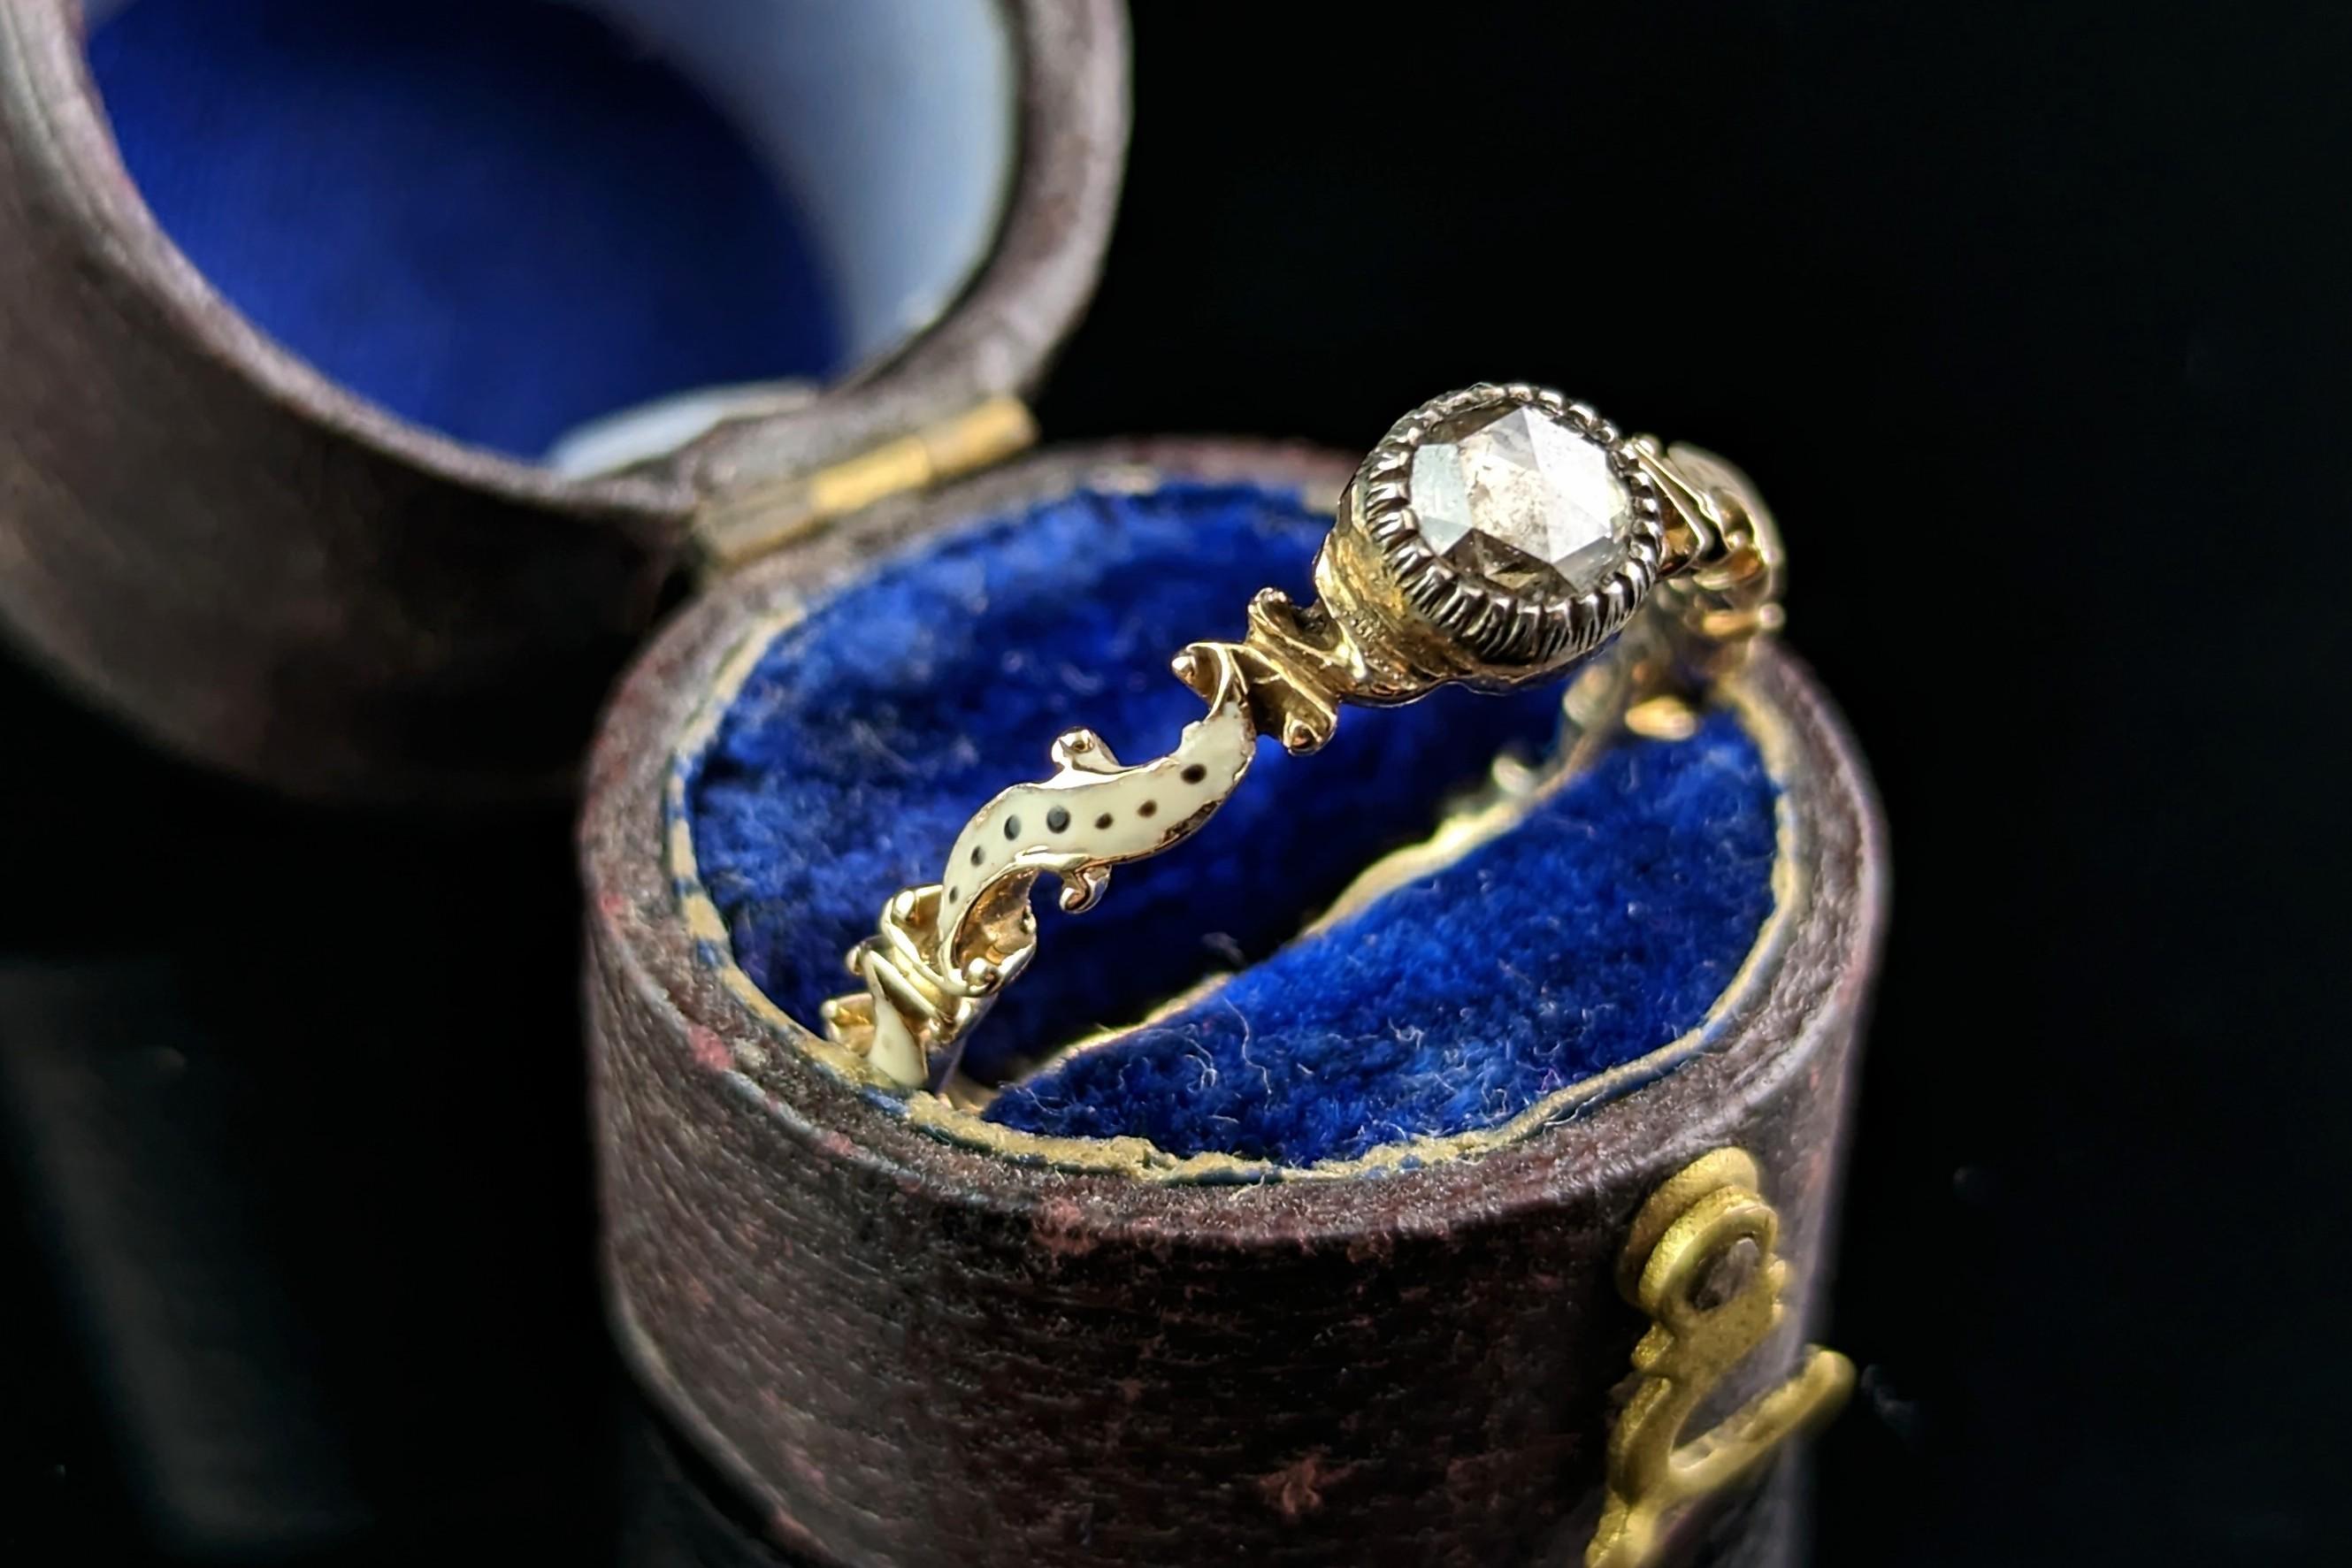 18th century engagement rings